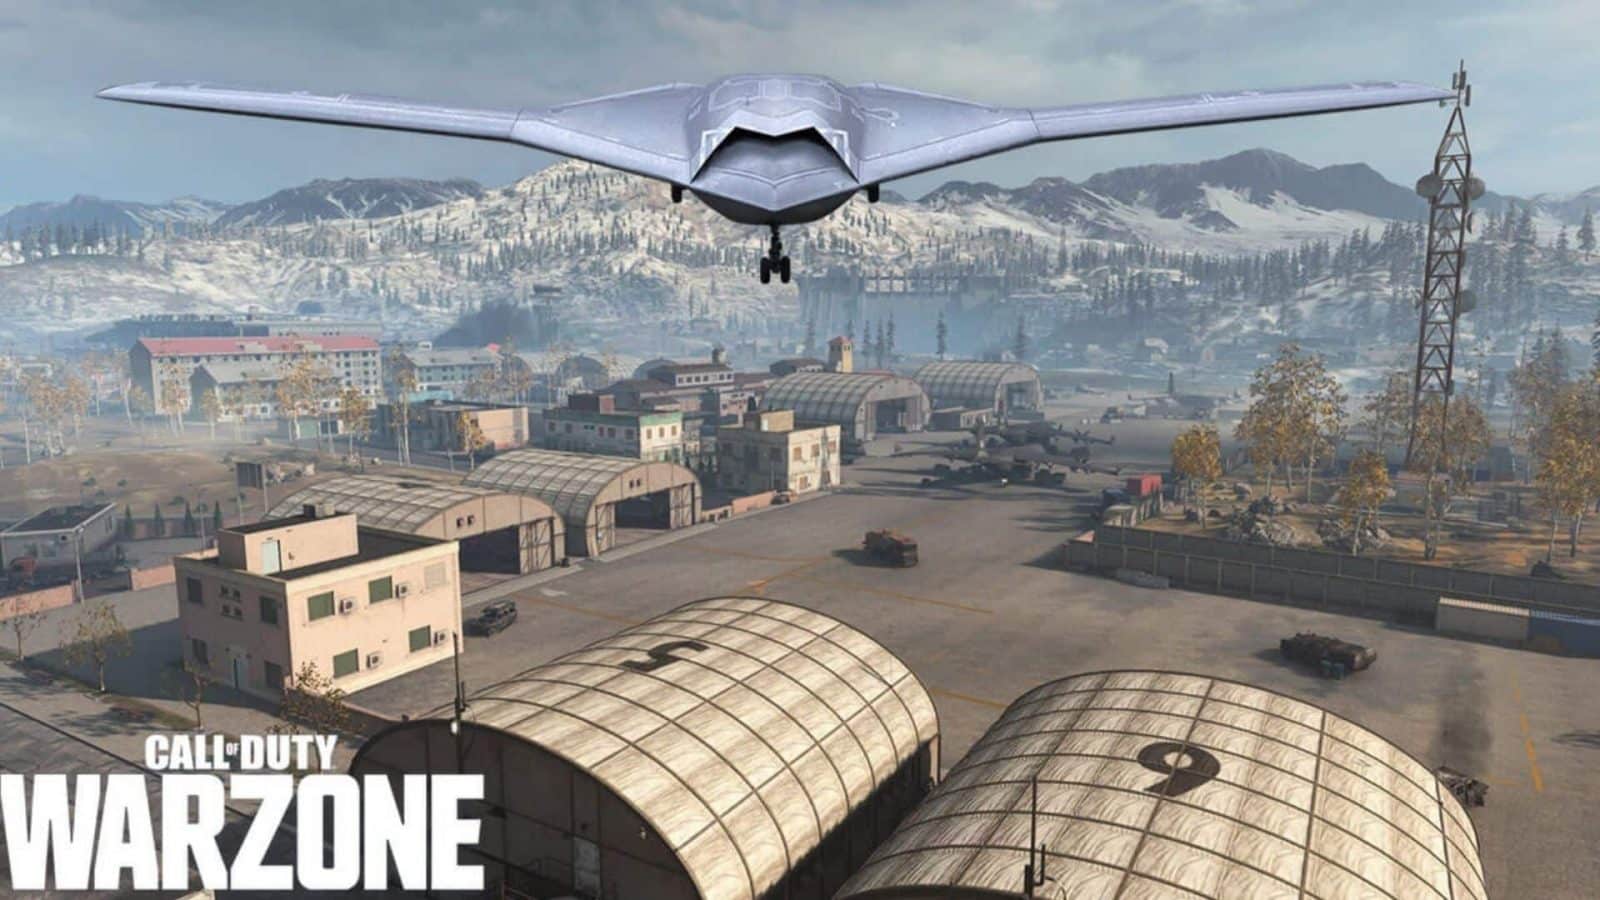 UAV Warzone